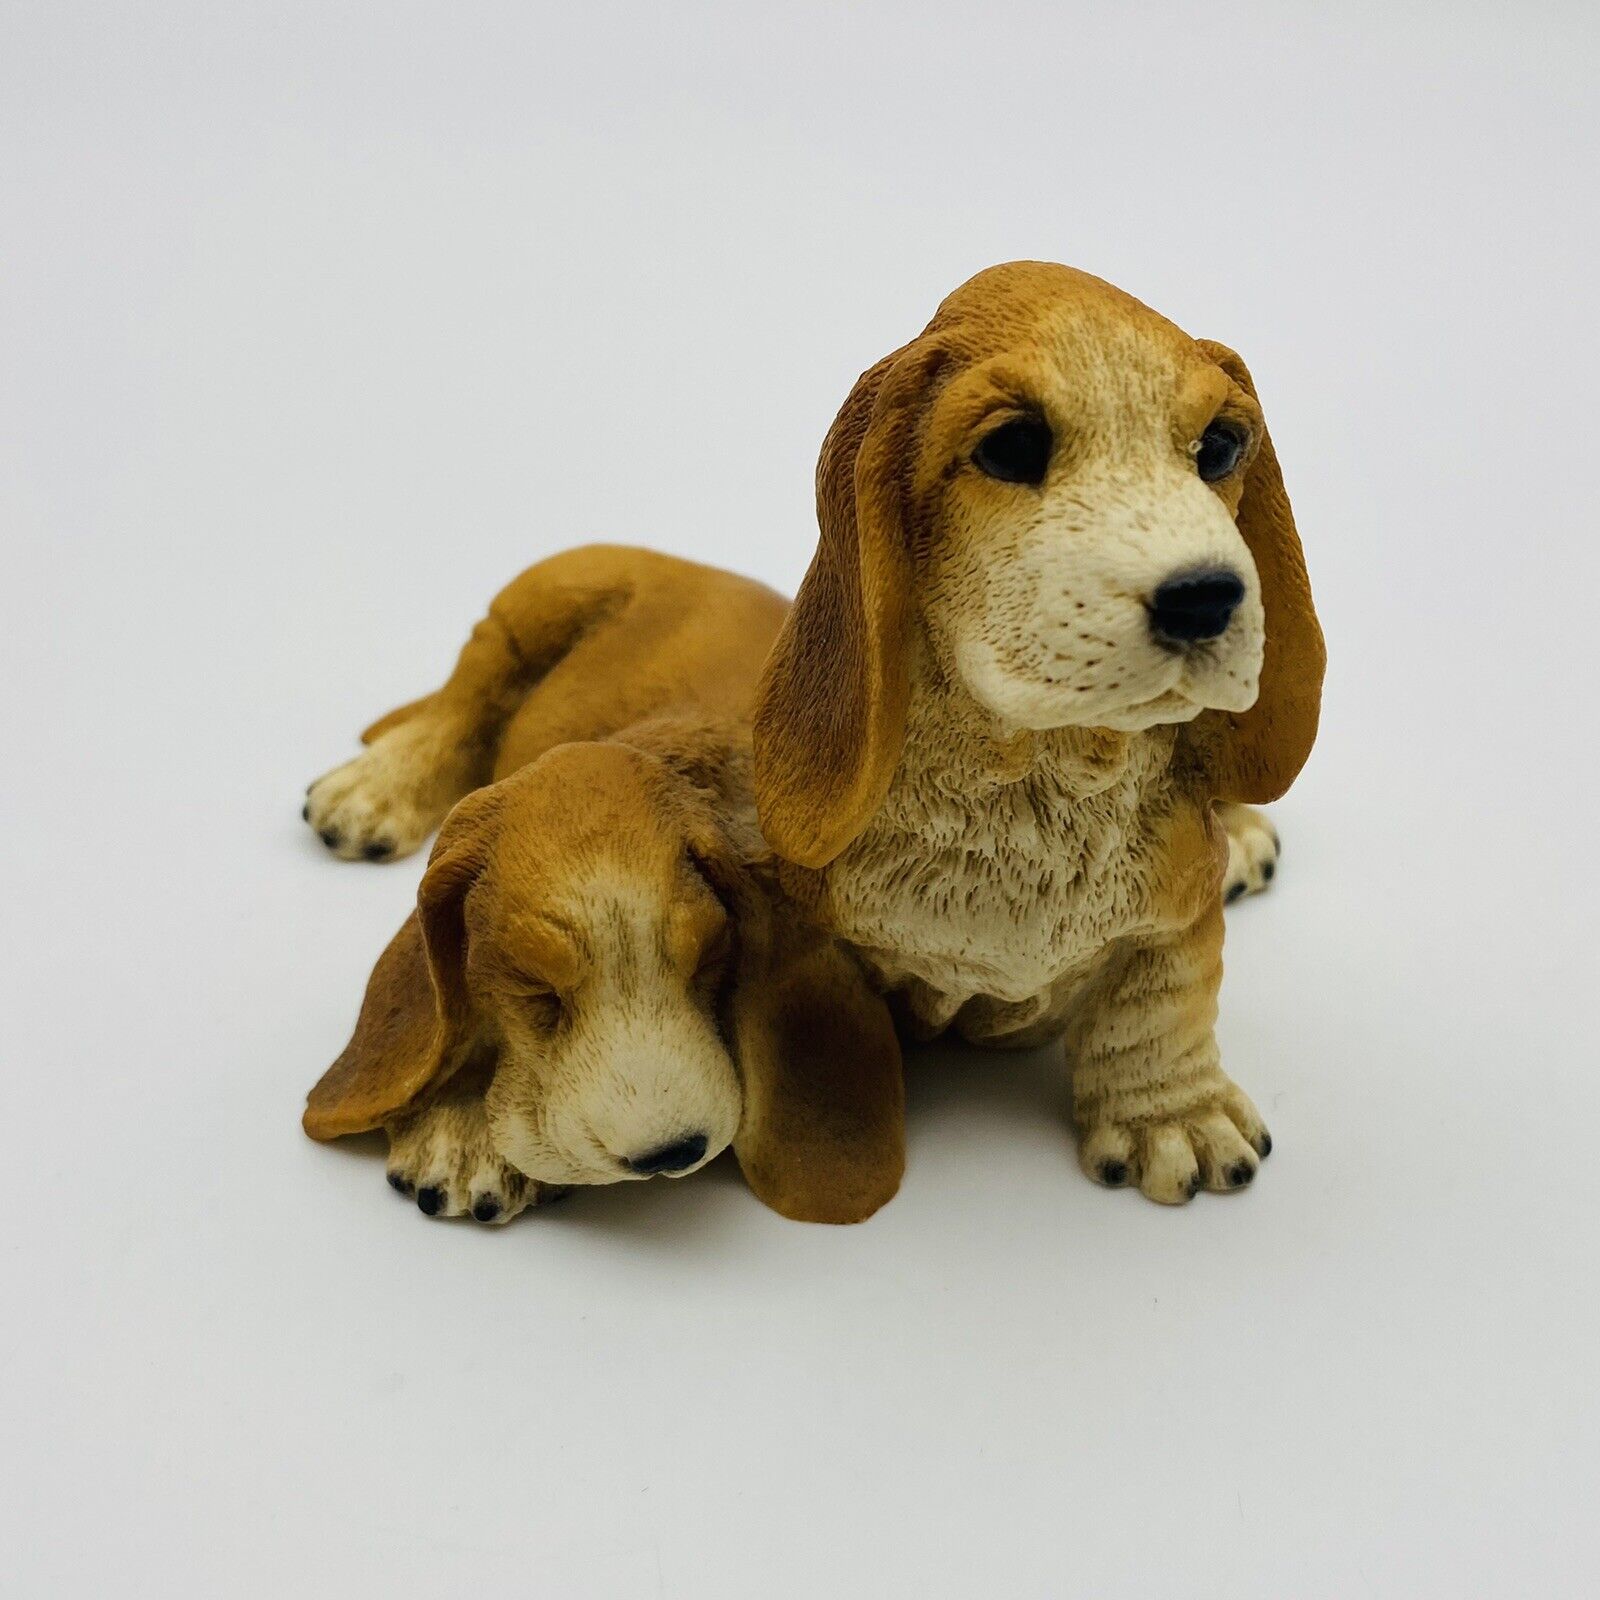 Vintage 1989 Bassett Hound Dogs Figurine, Original by Castagna, Made in Italy